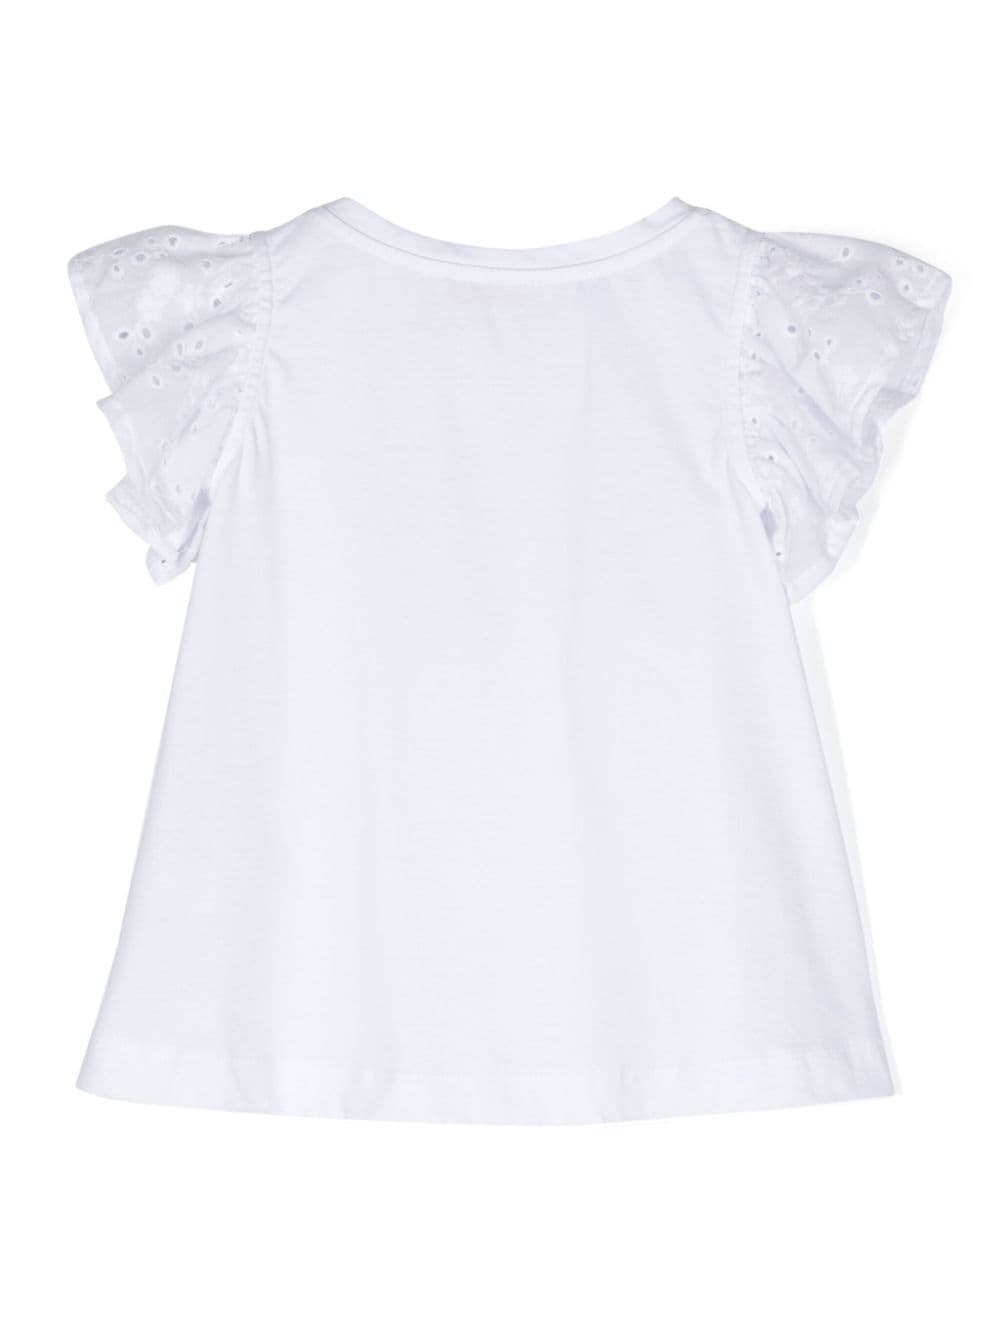 T-shirt fille blanc/multicolore